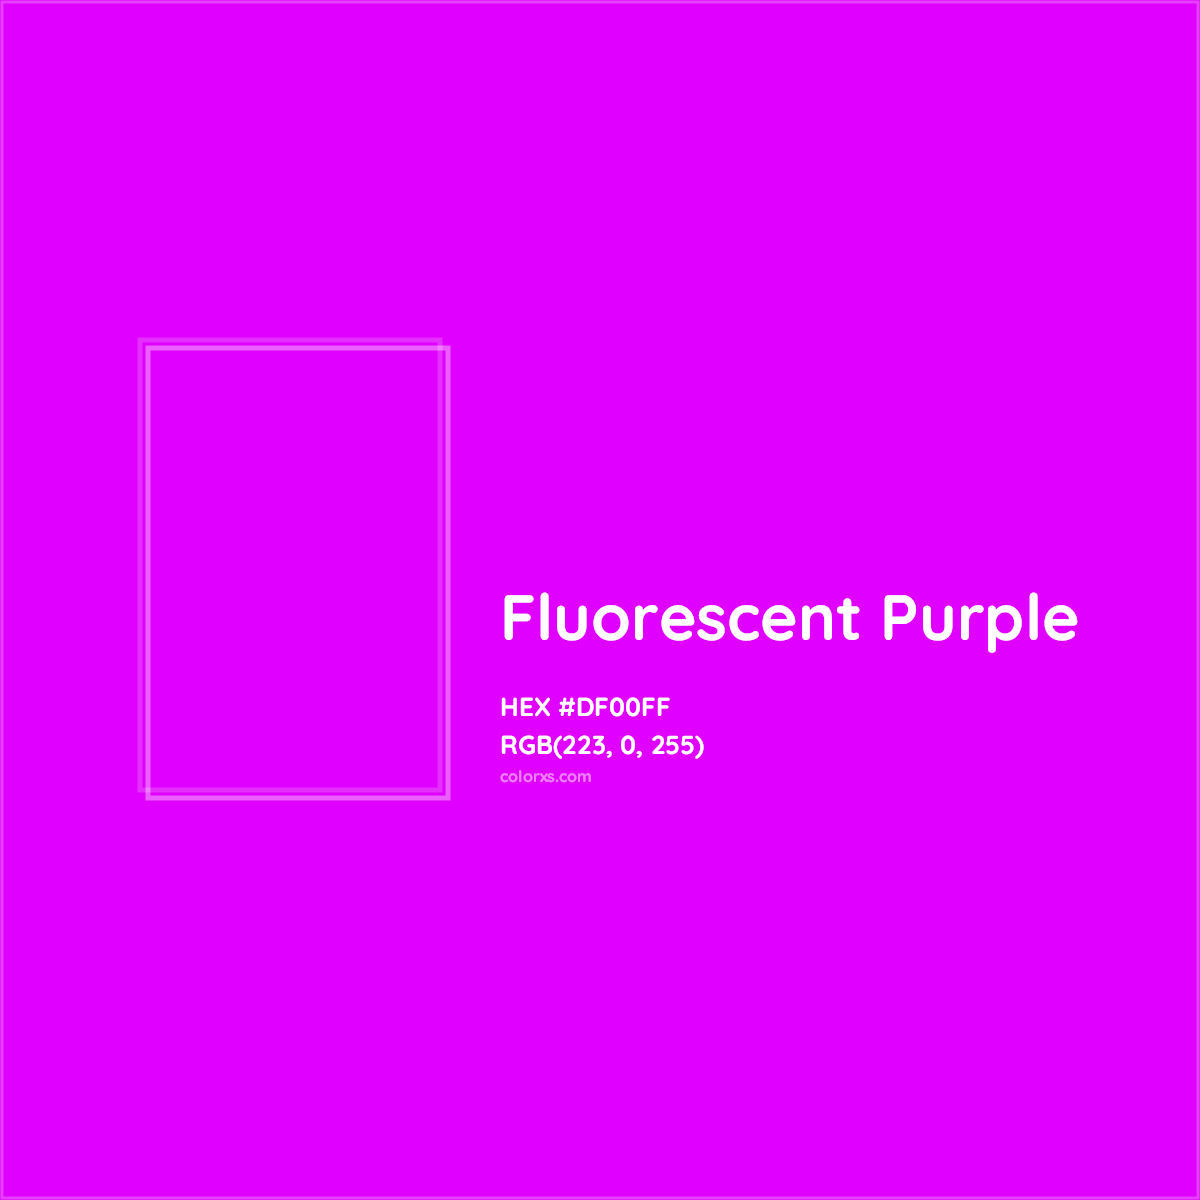 HEX #DF00FF Fluorescent Purple Color - Color Code